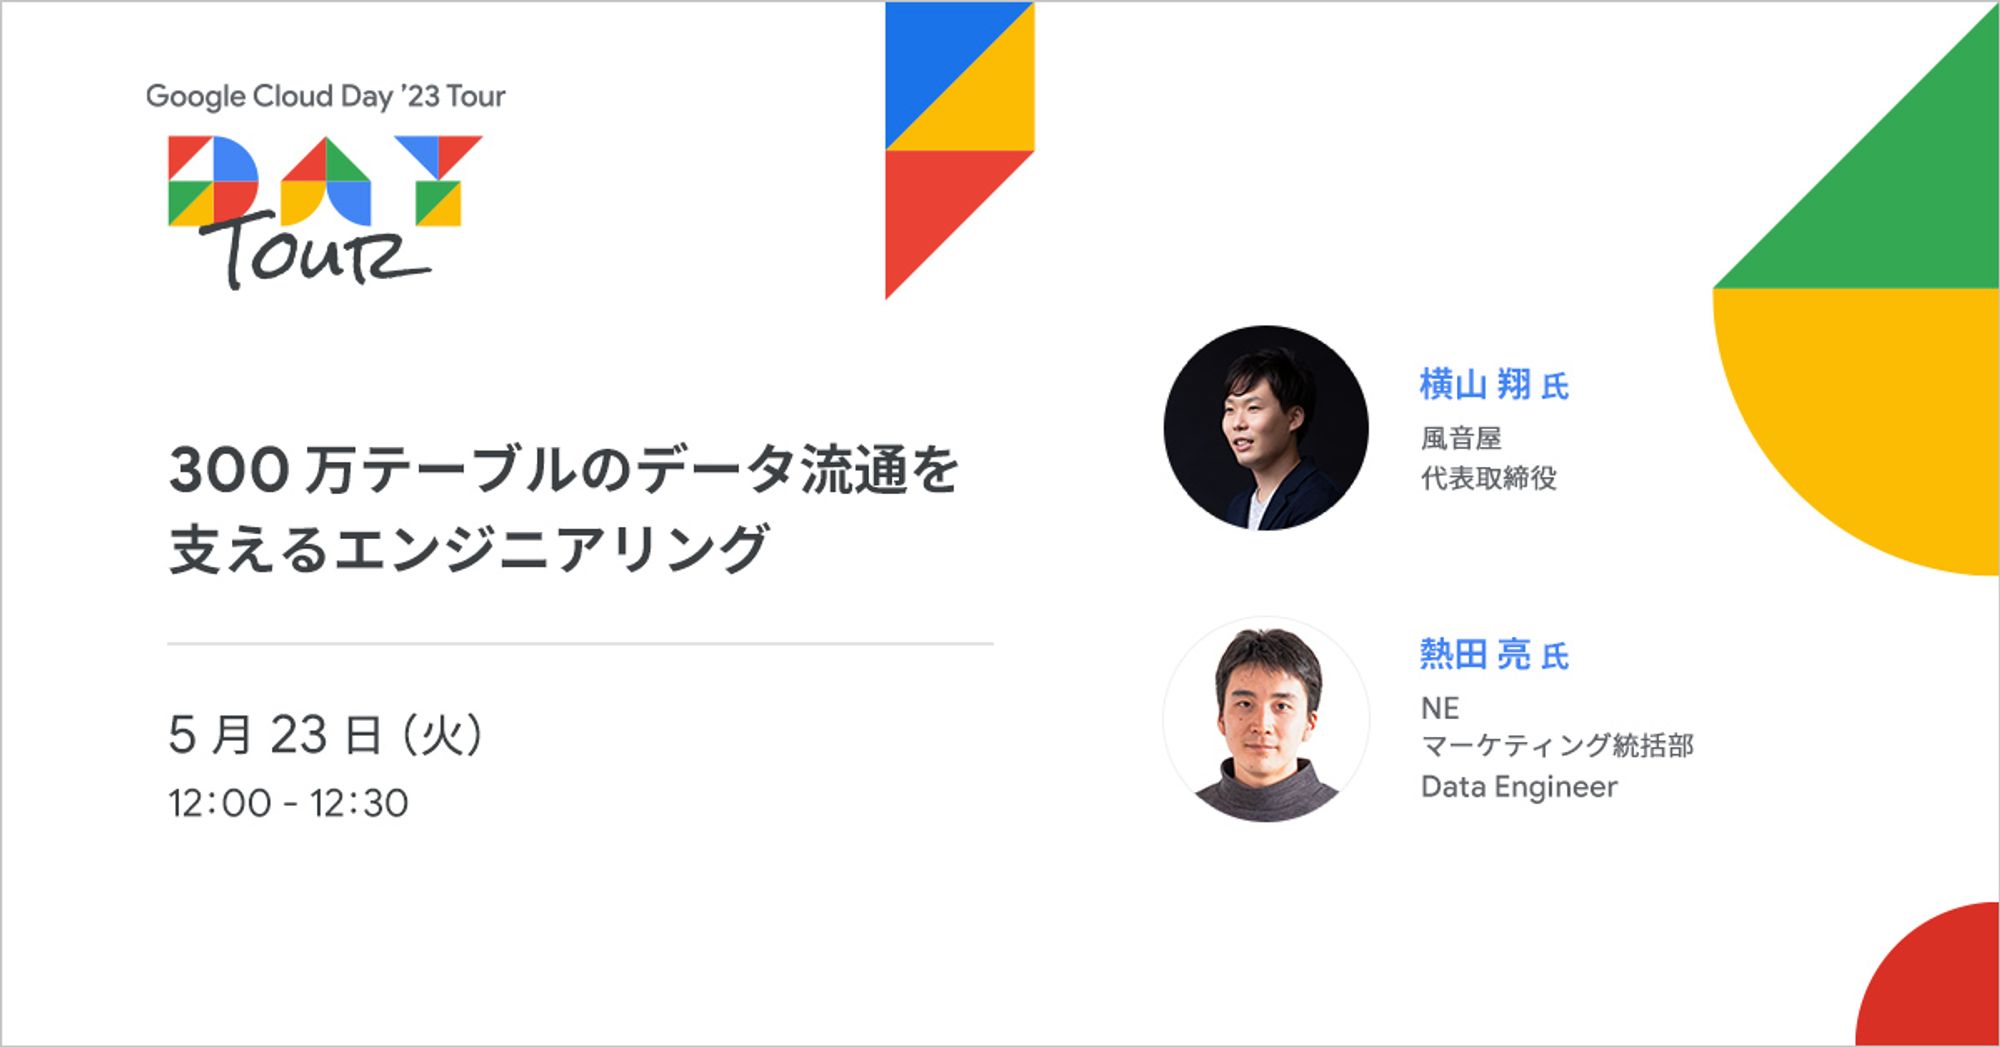 NE株式会社、Google Cloud主催カンファレンス「Google Cloud Day ’23 Tour in TOKYO」に株式会社風音屋と共同登壇！